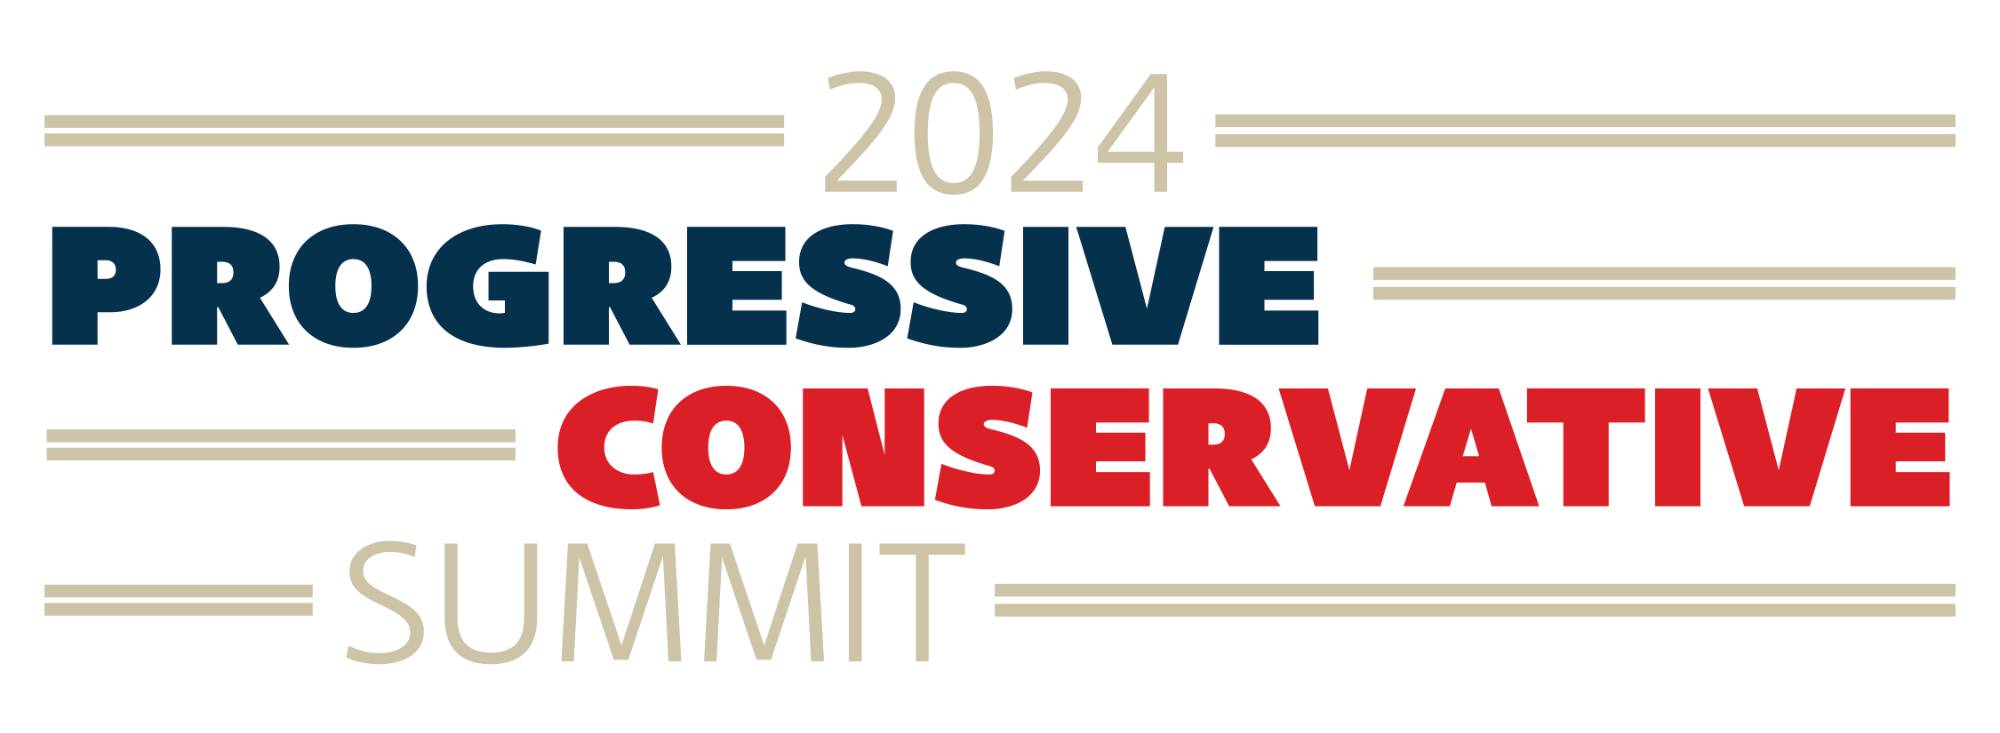 progressive conservative summit 2024